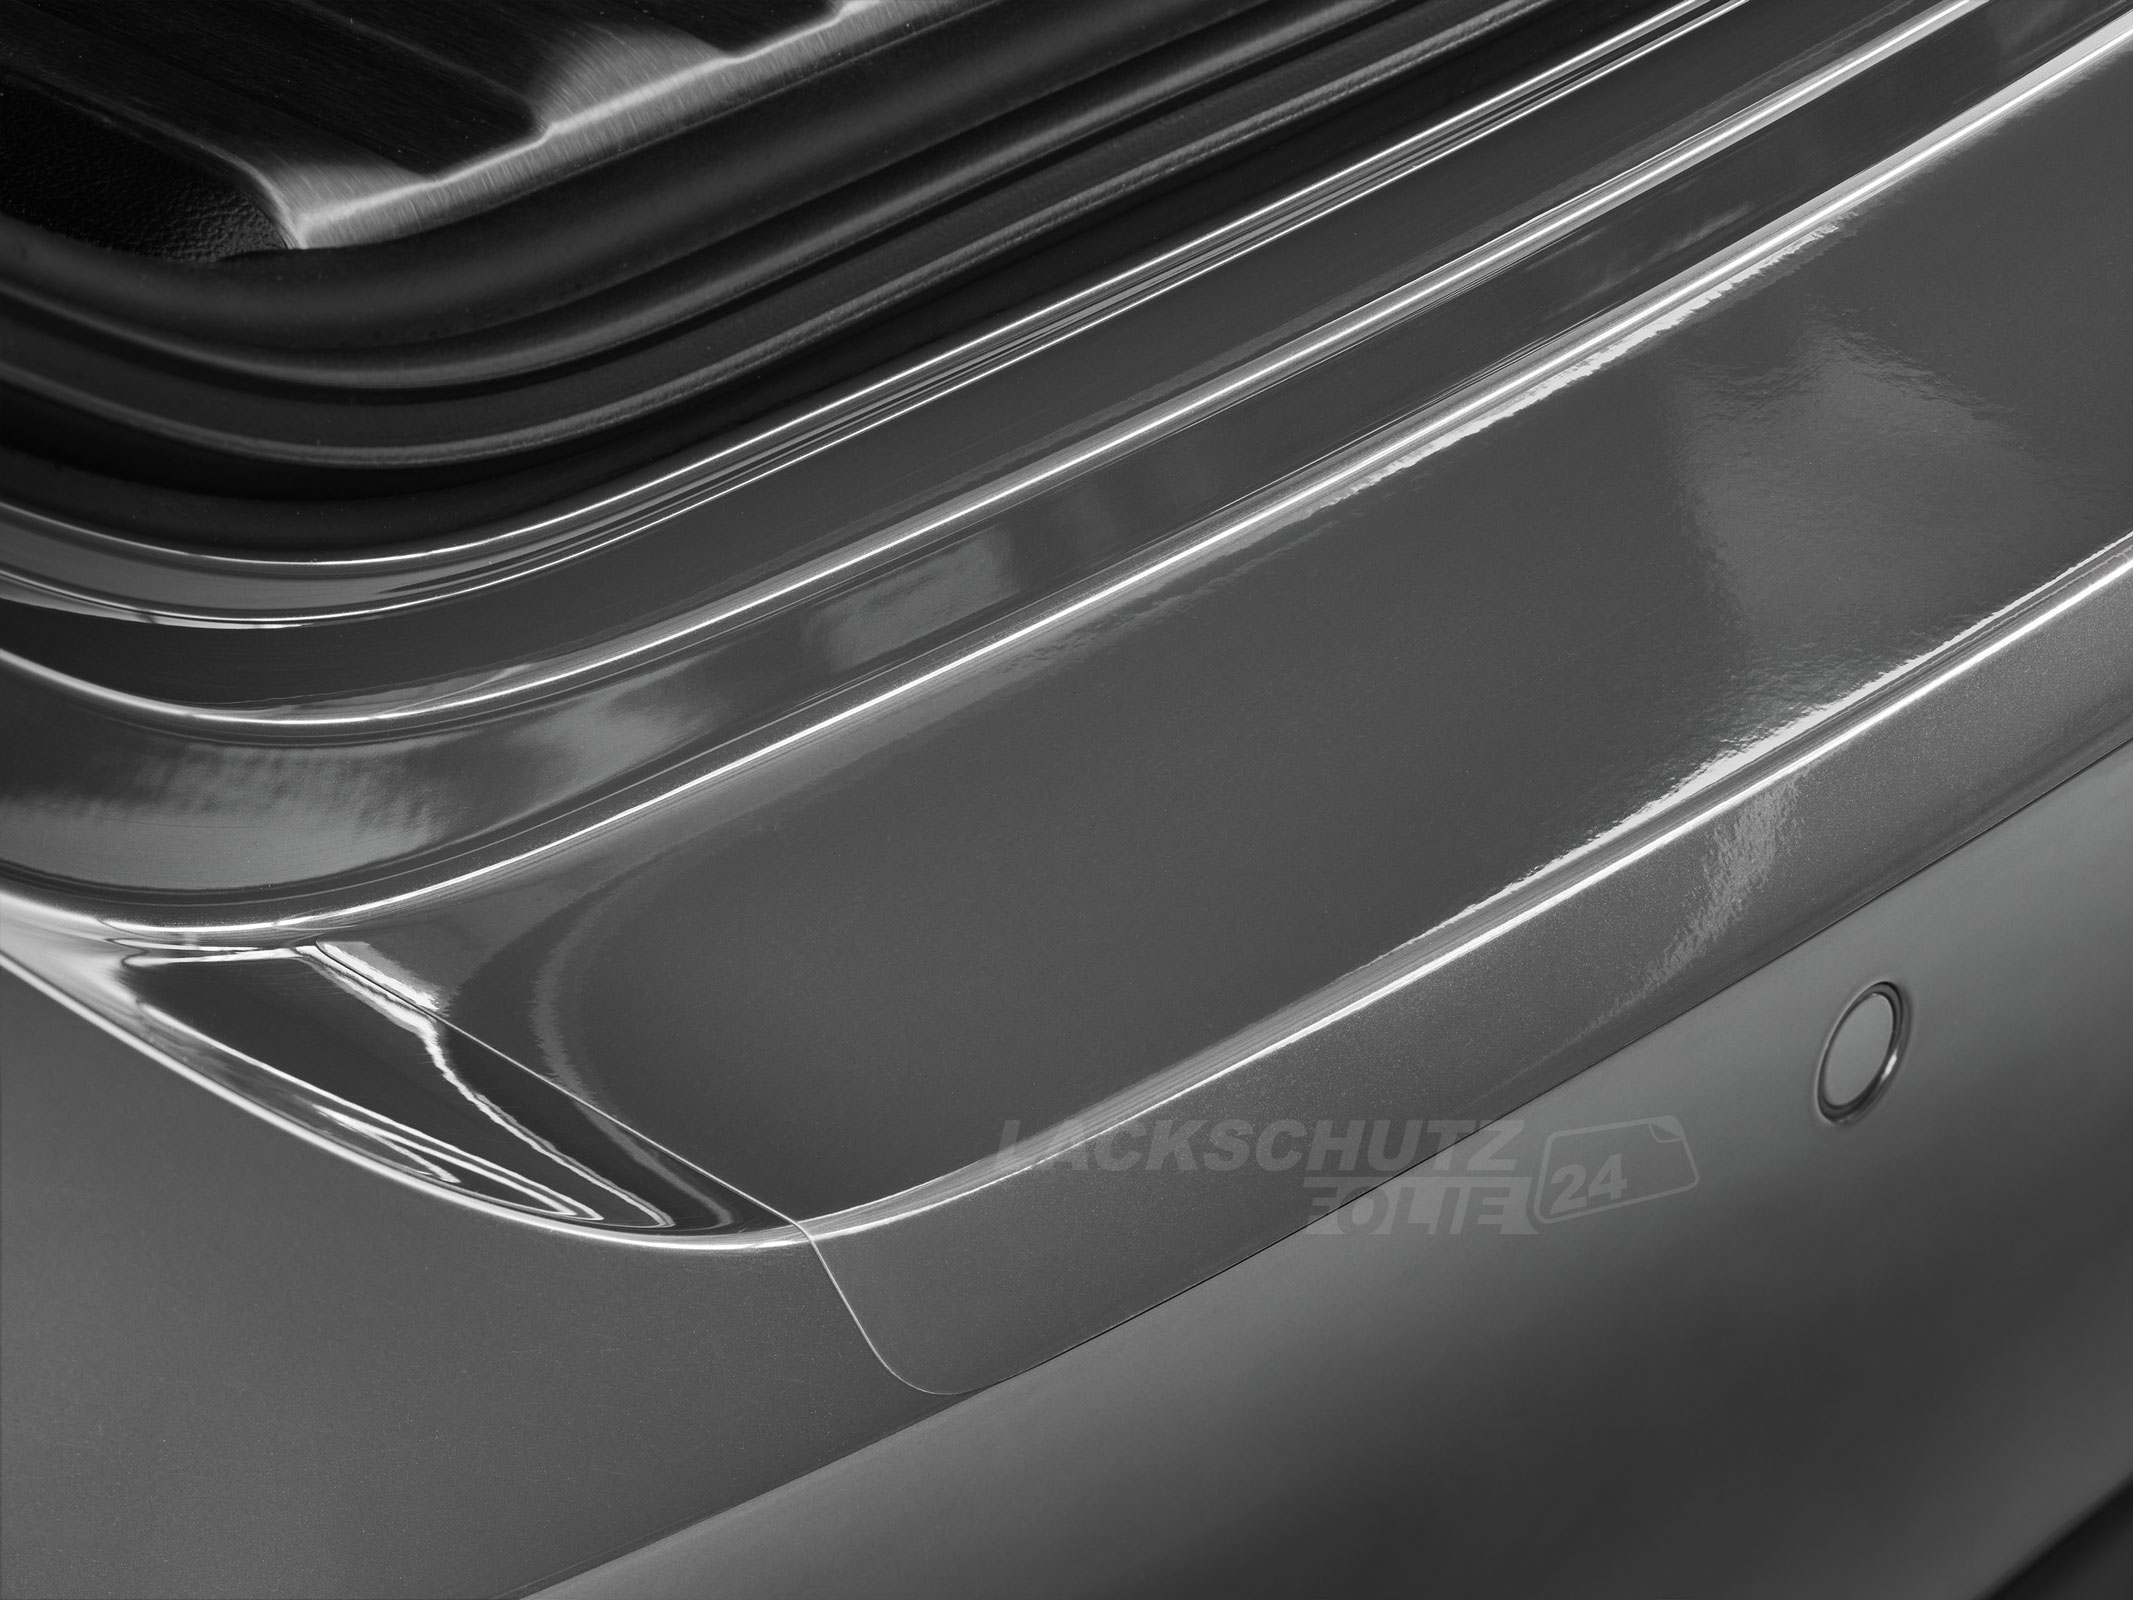 Ladekantenschutzfolie - Transparent Glatt Hochglänzend 240 µm stark für Honda Civic Tourer (Kombi) 9. Generation, BJ 2012-2017